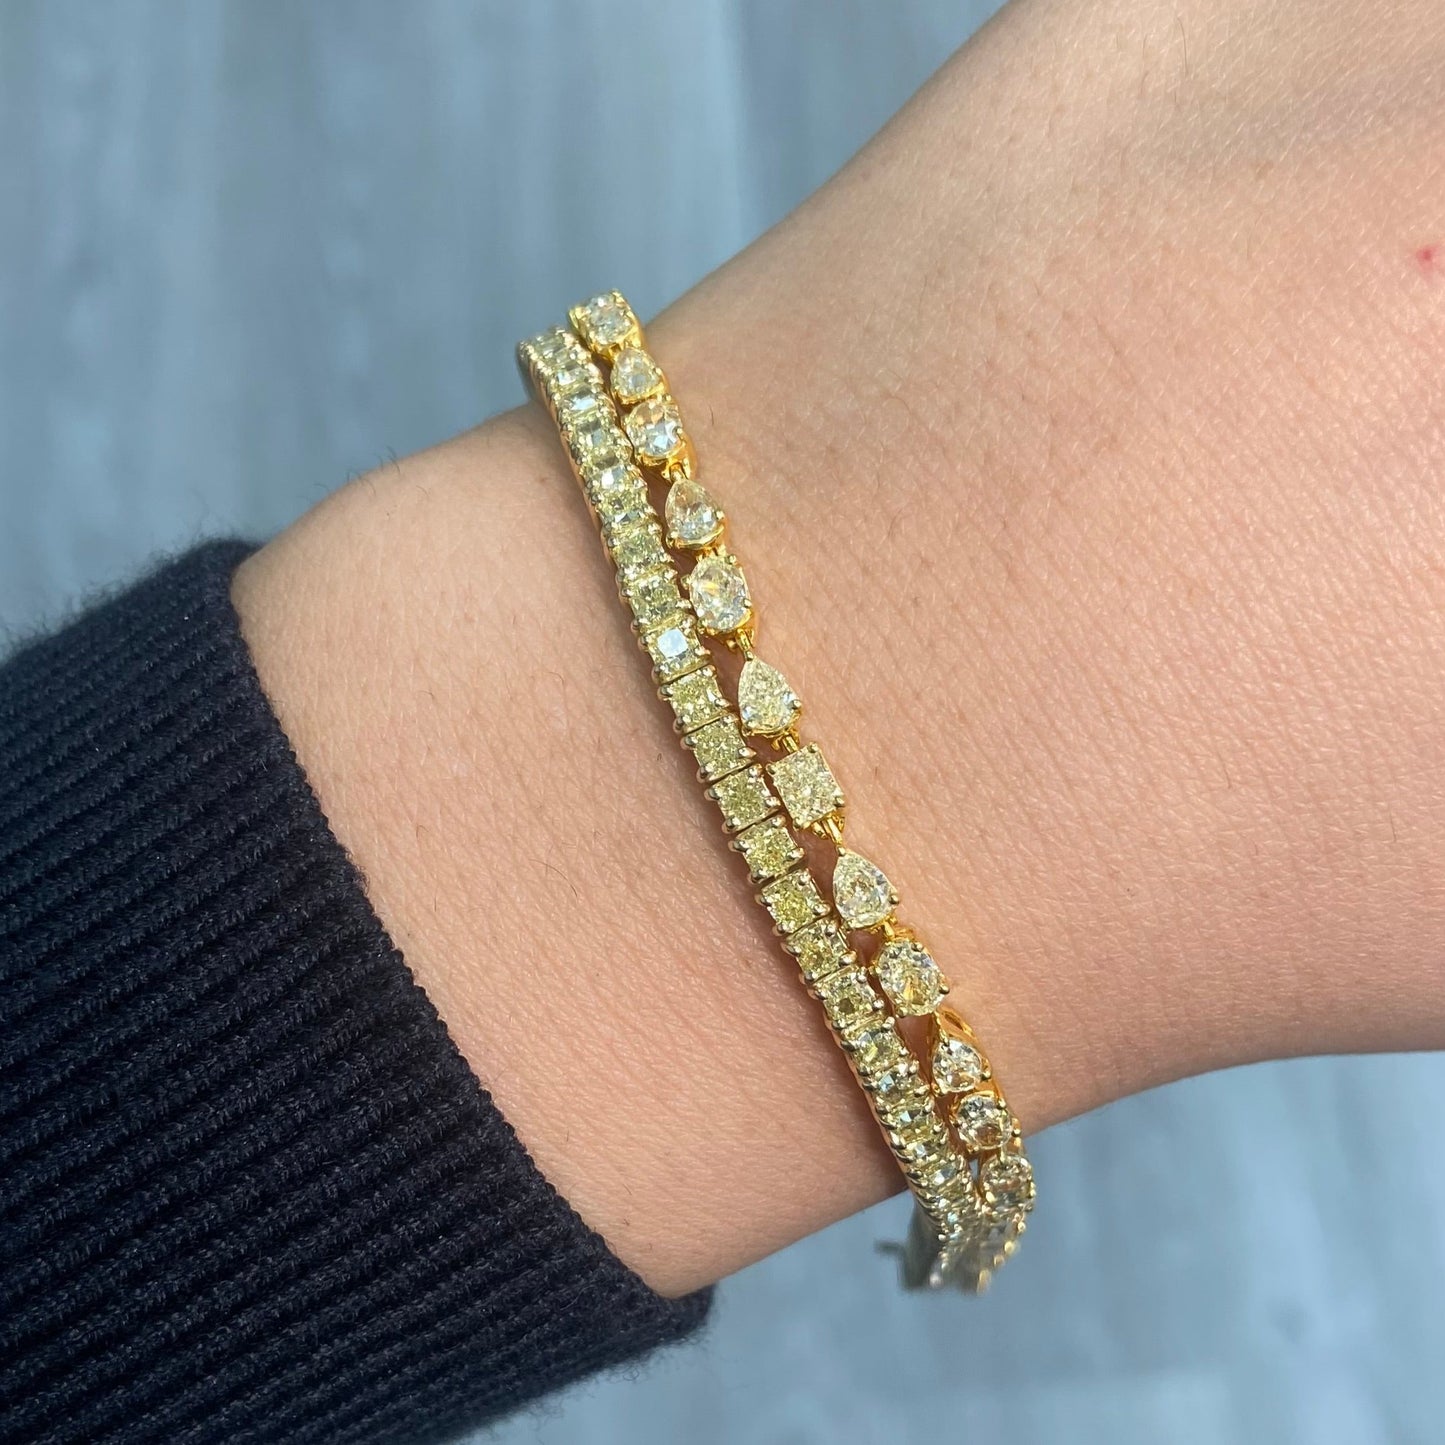 Fancy intense yellow diamond tennis bracelet with natural canary diamonds